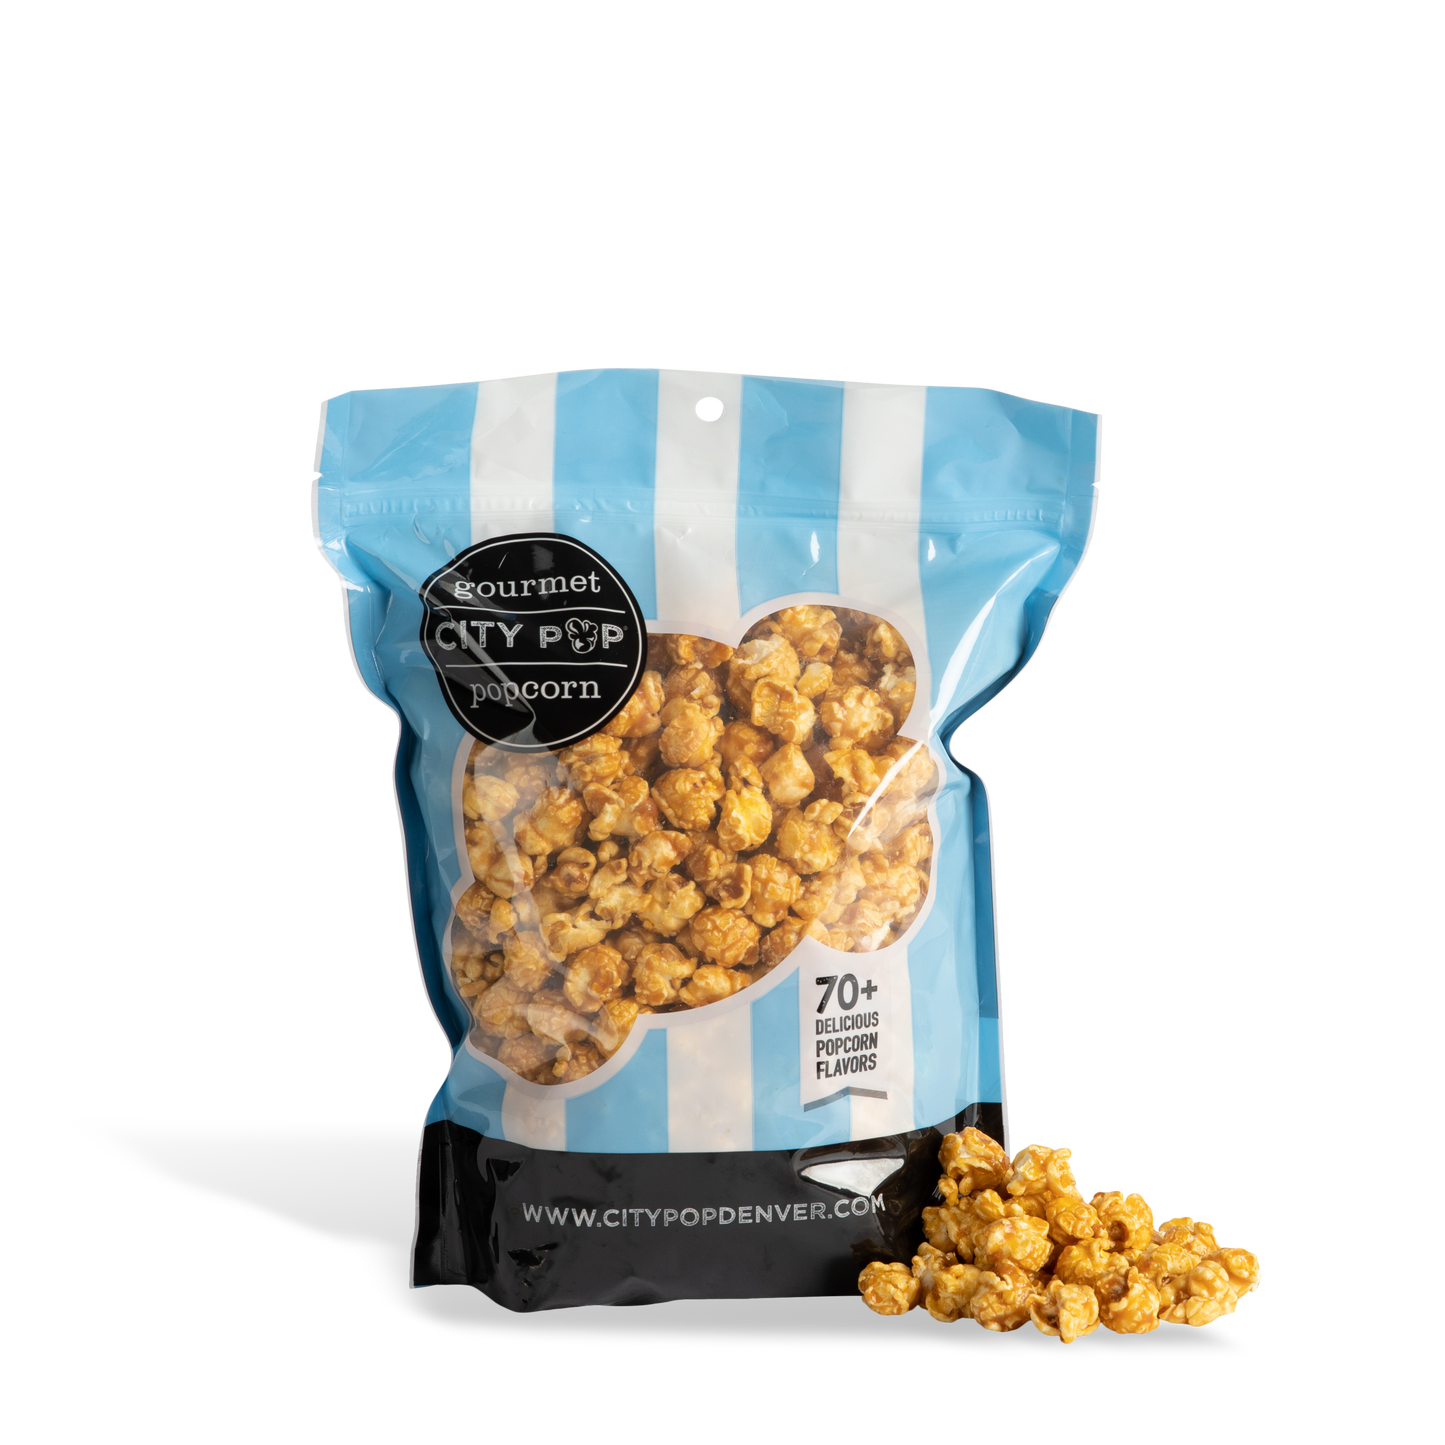 Toffee Popcorn